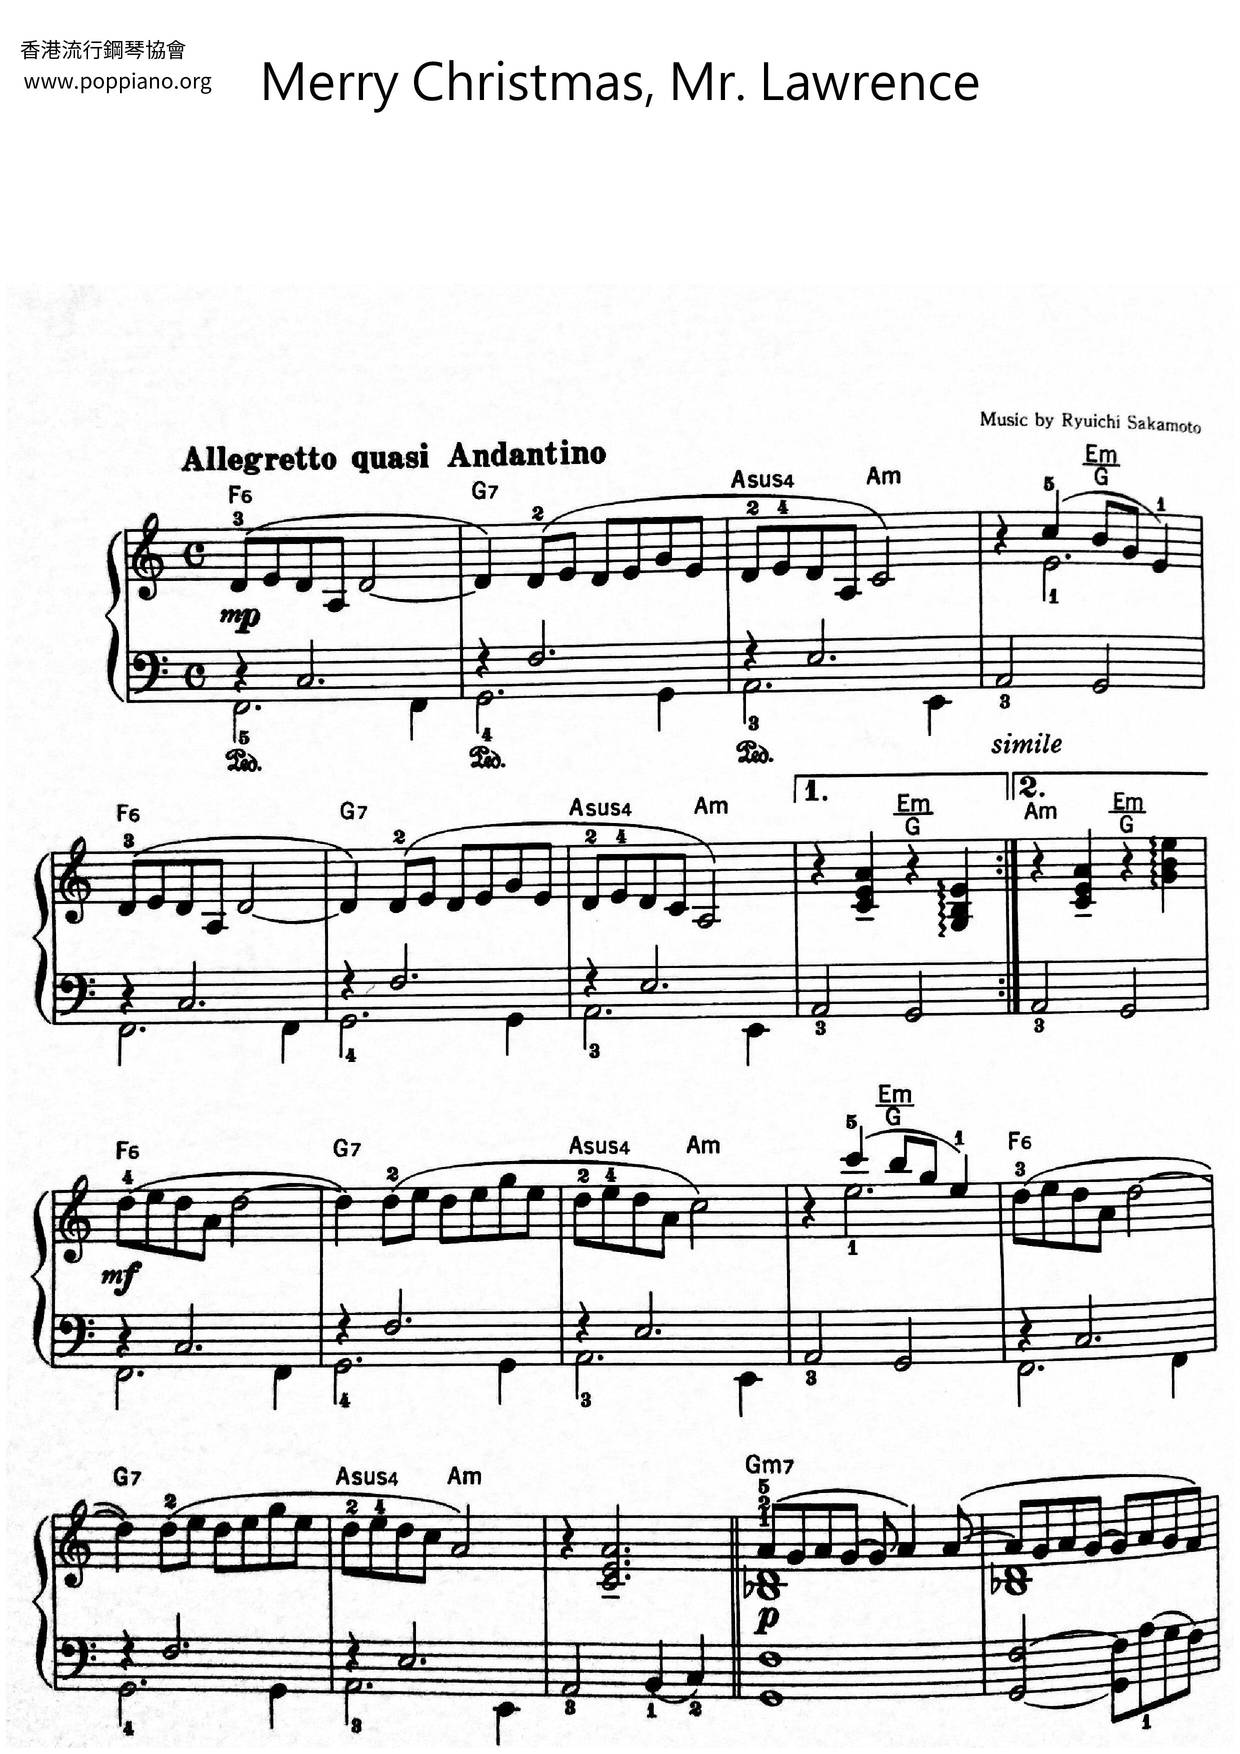 Merry Christmas, Mr. Lawrenceピアノ譜